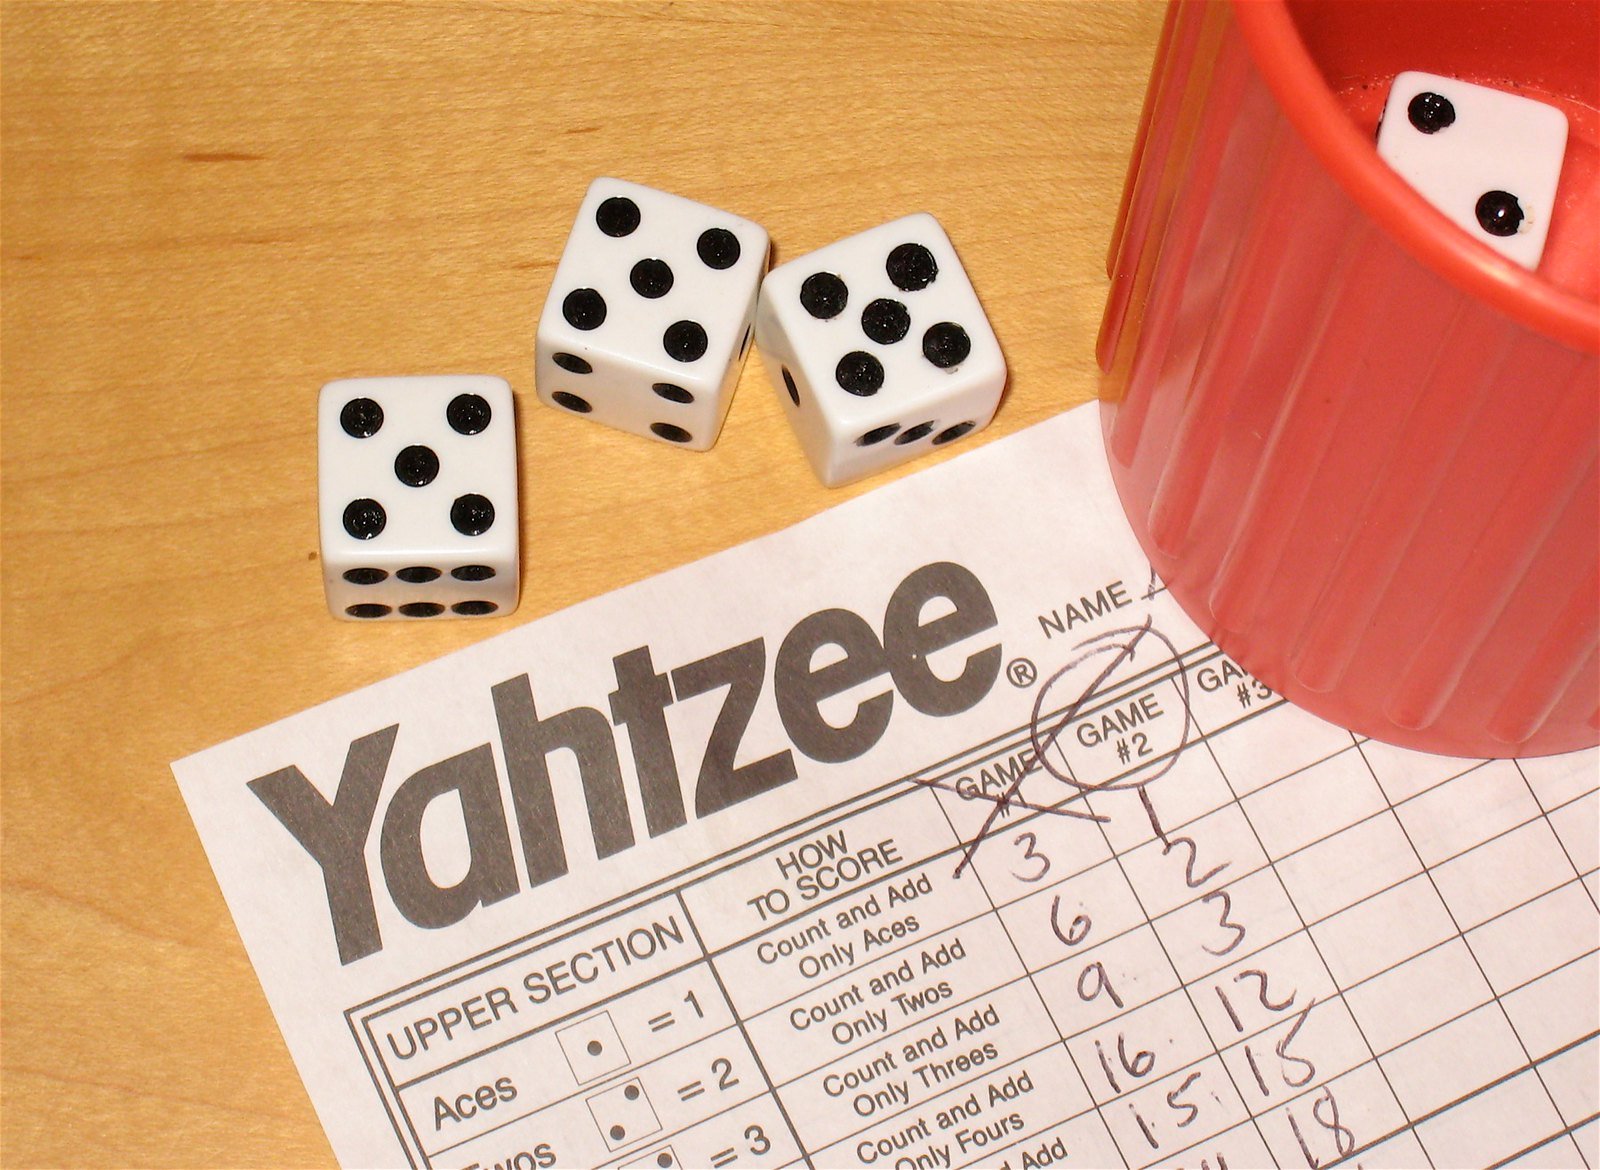 Yahtzee score sheet